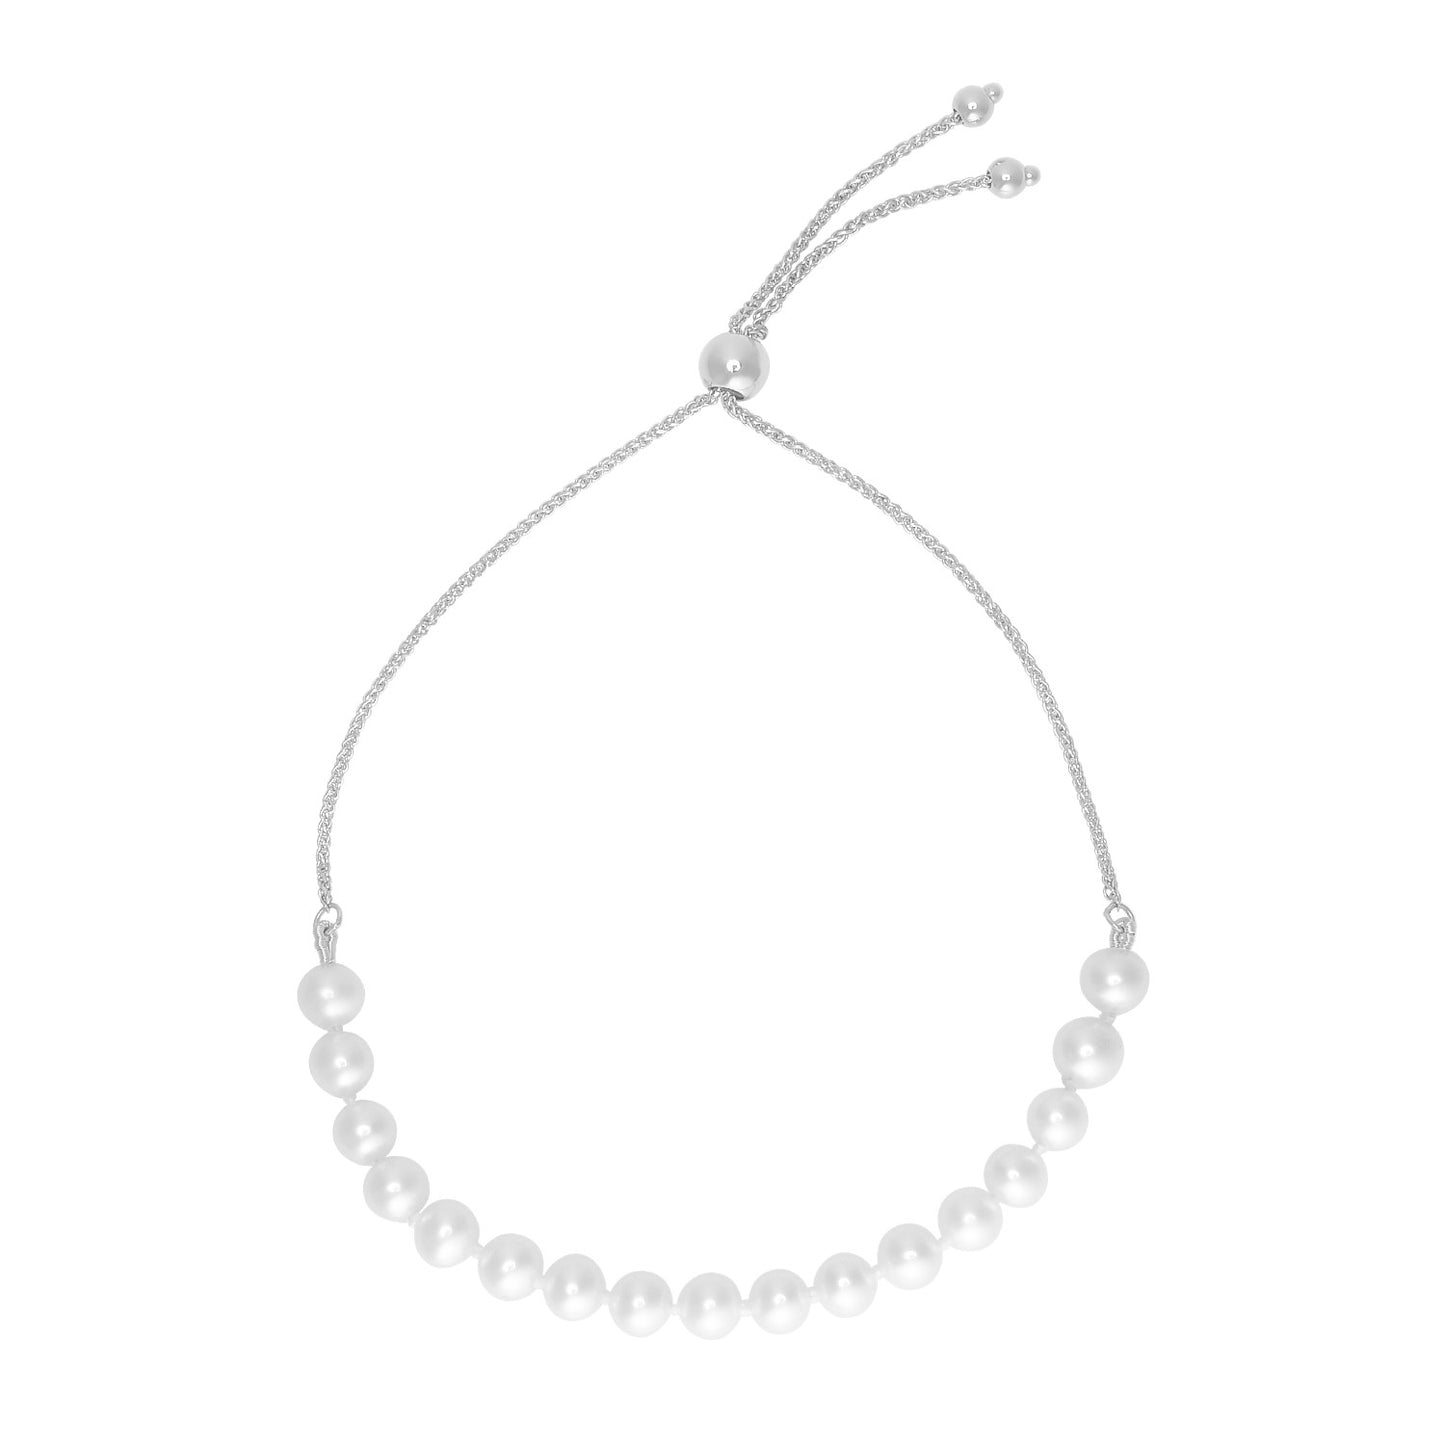 14k White Gold Adjustable Friendship Bracelet with Pearls (5.00 mm)